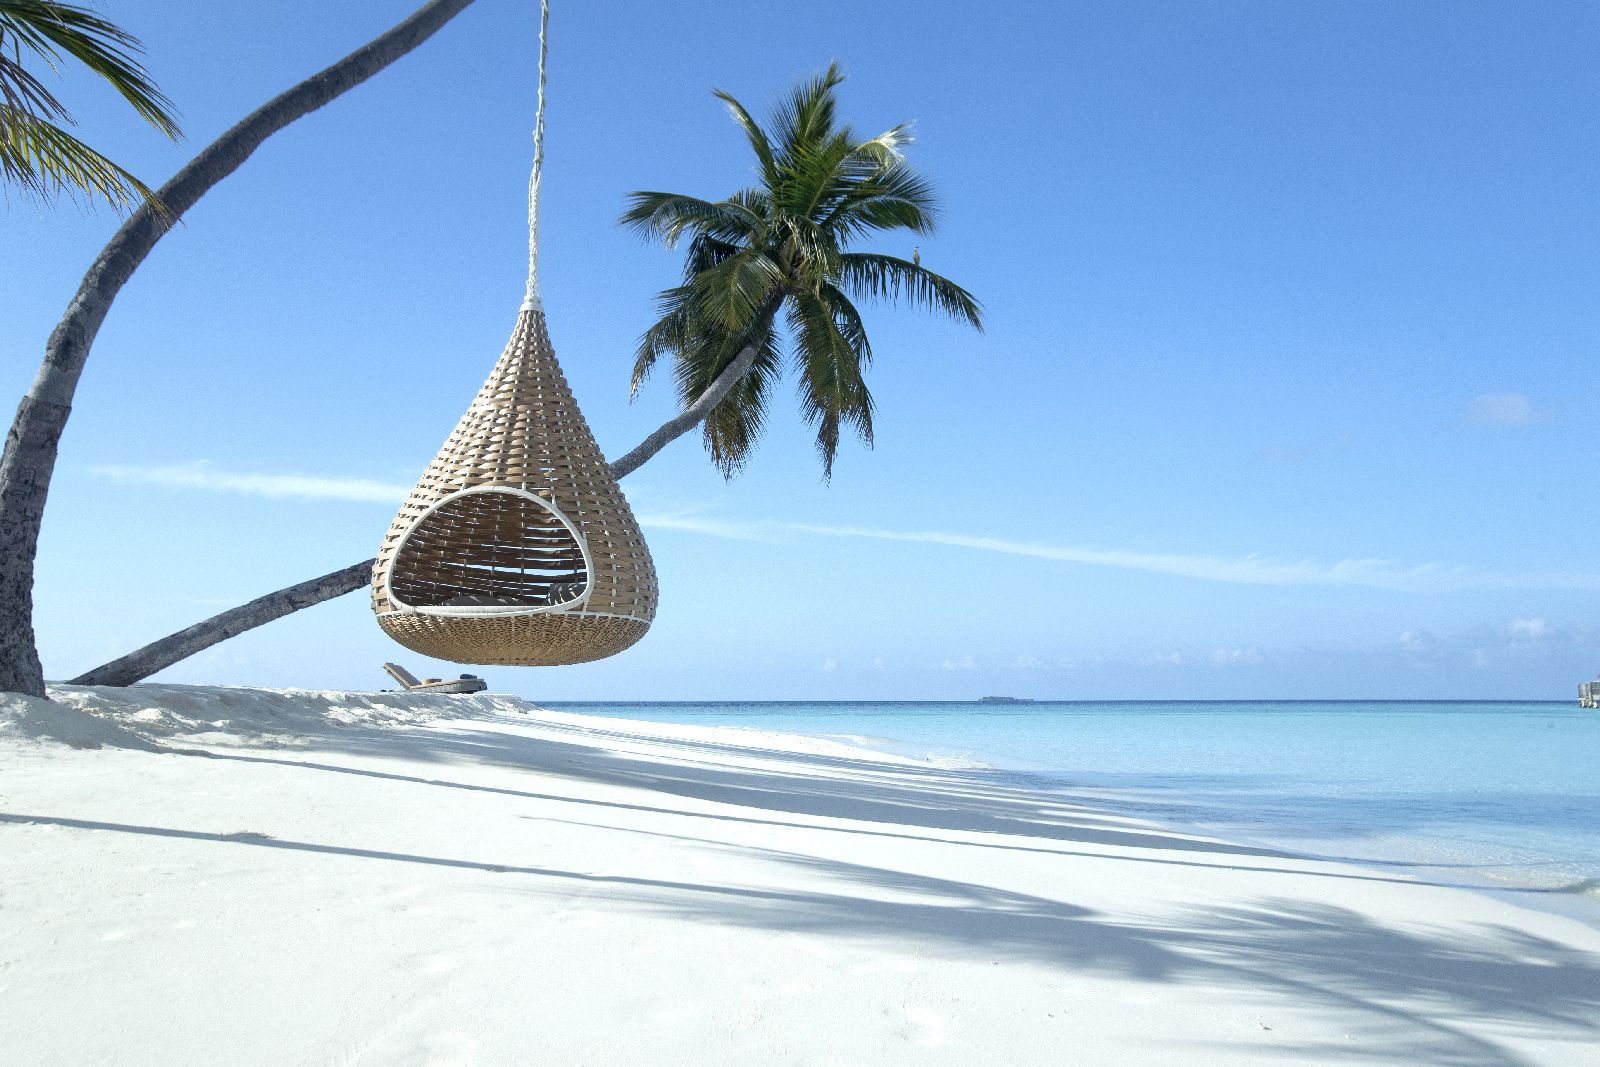 Swing seat and perfect beach scene at Constance Halaveli Maldives